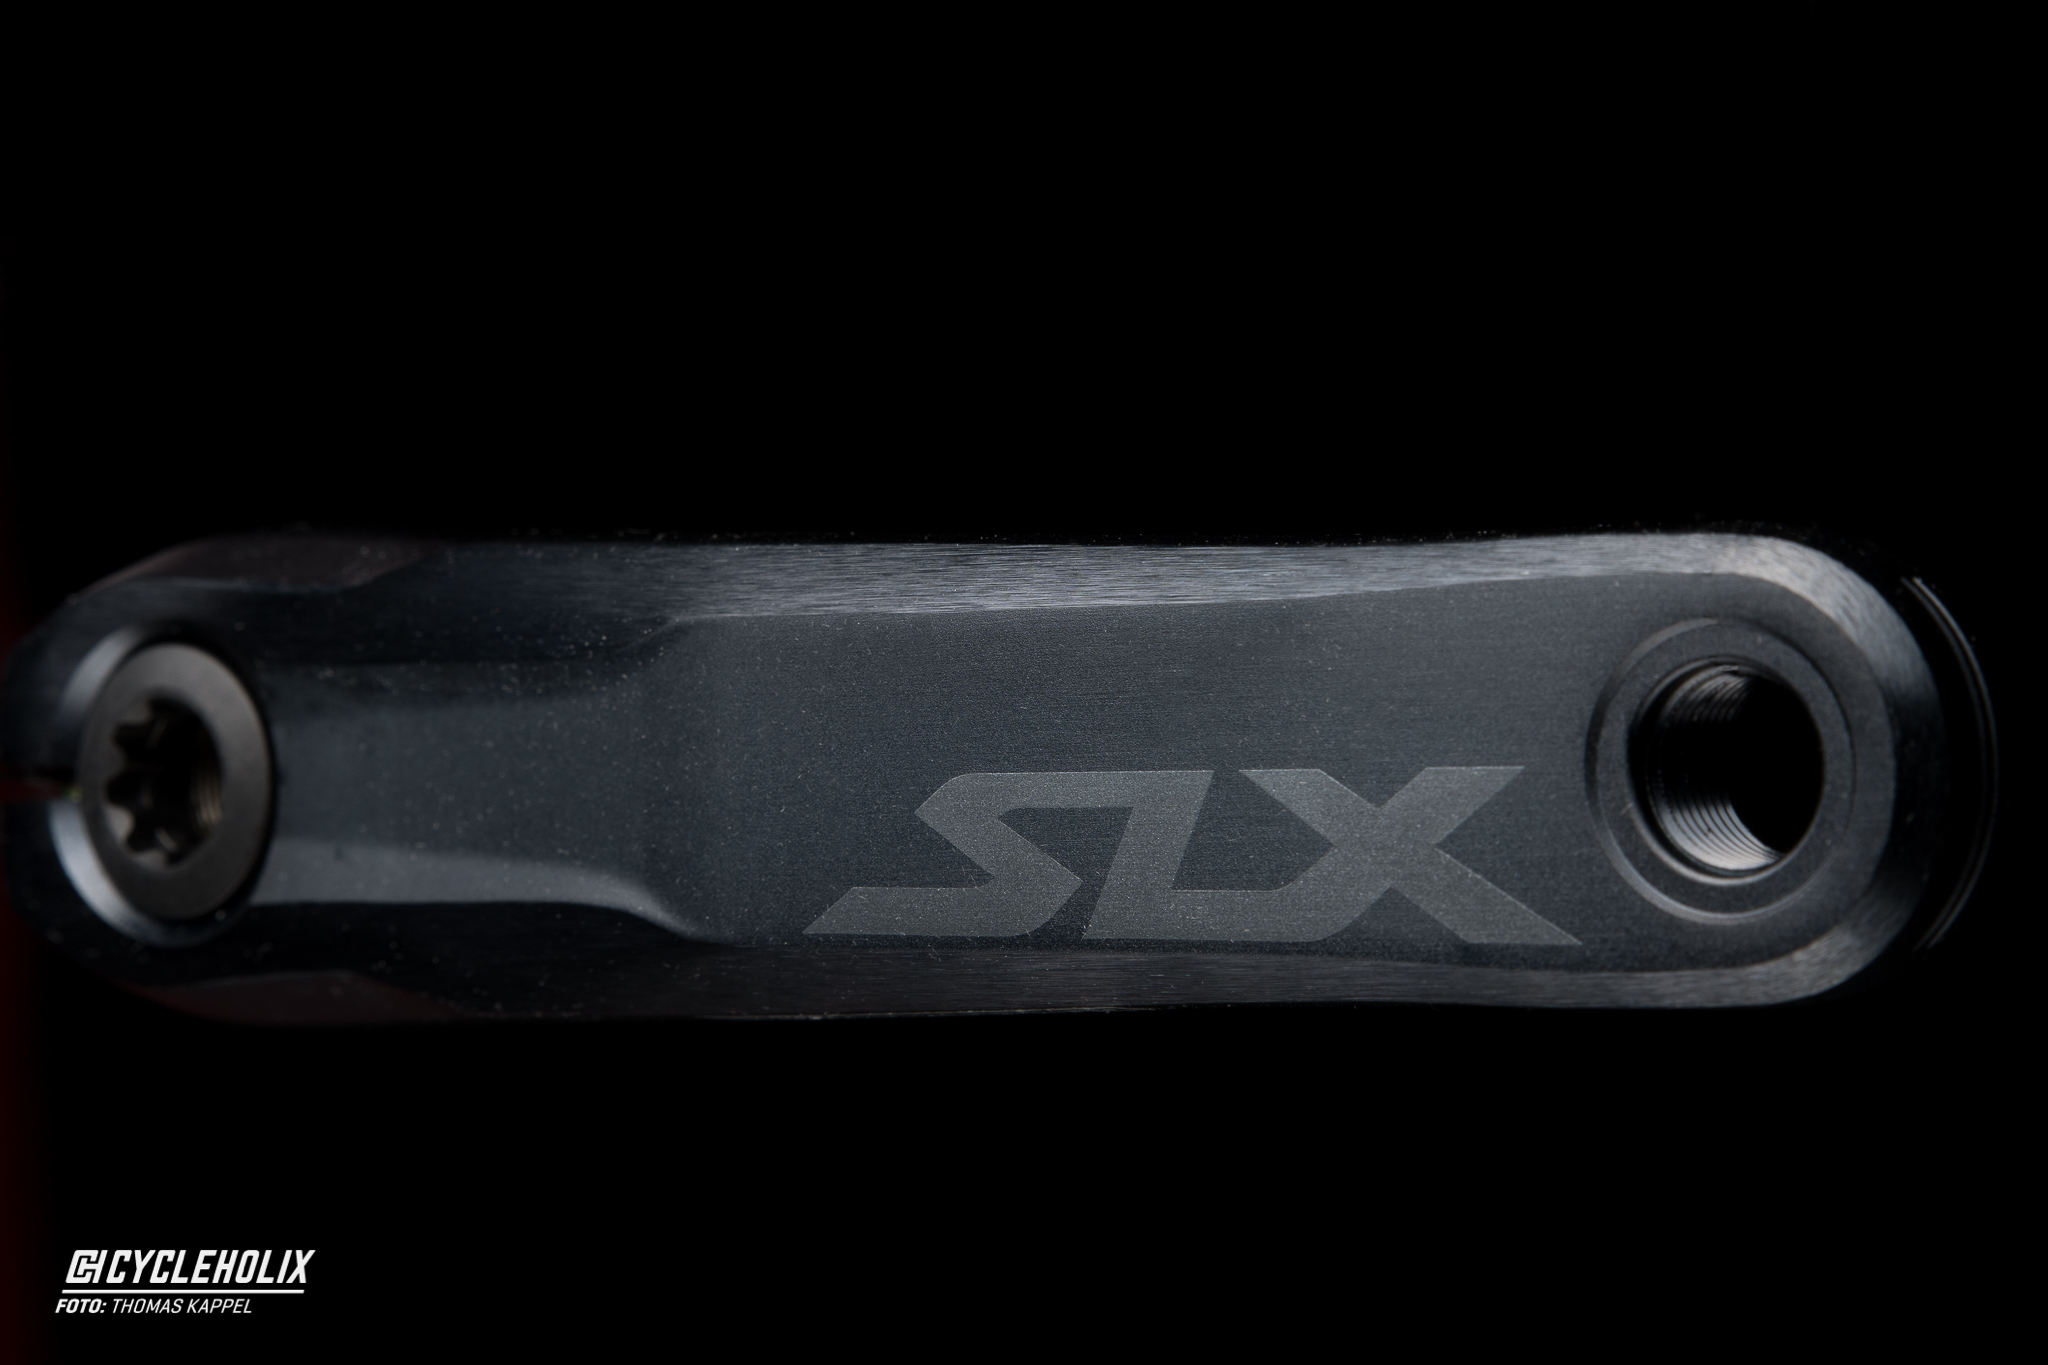 2019 Shimano SLX 12 Cycleholix